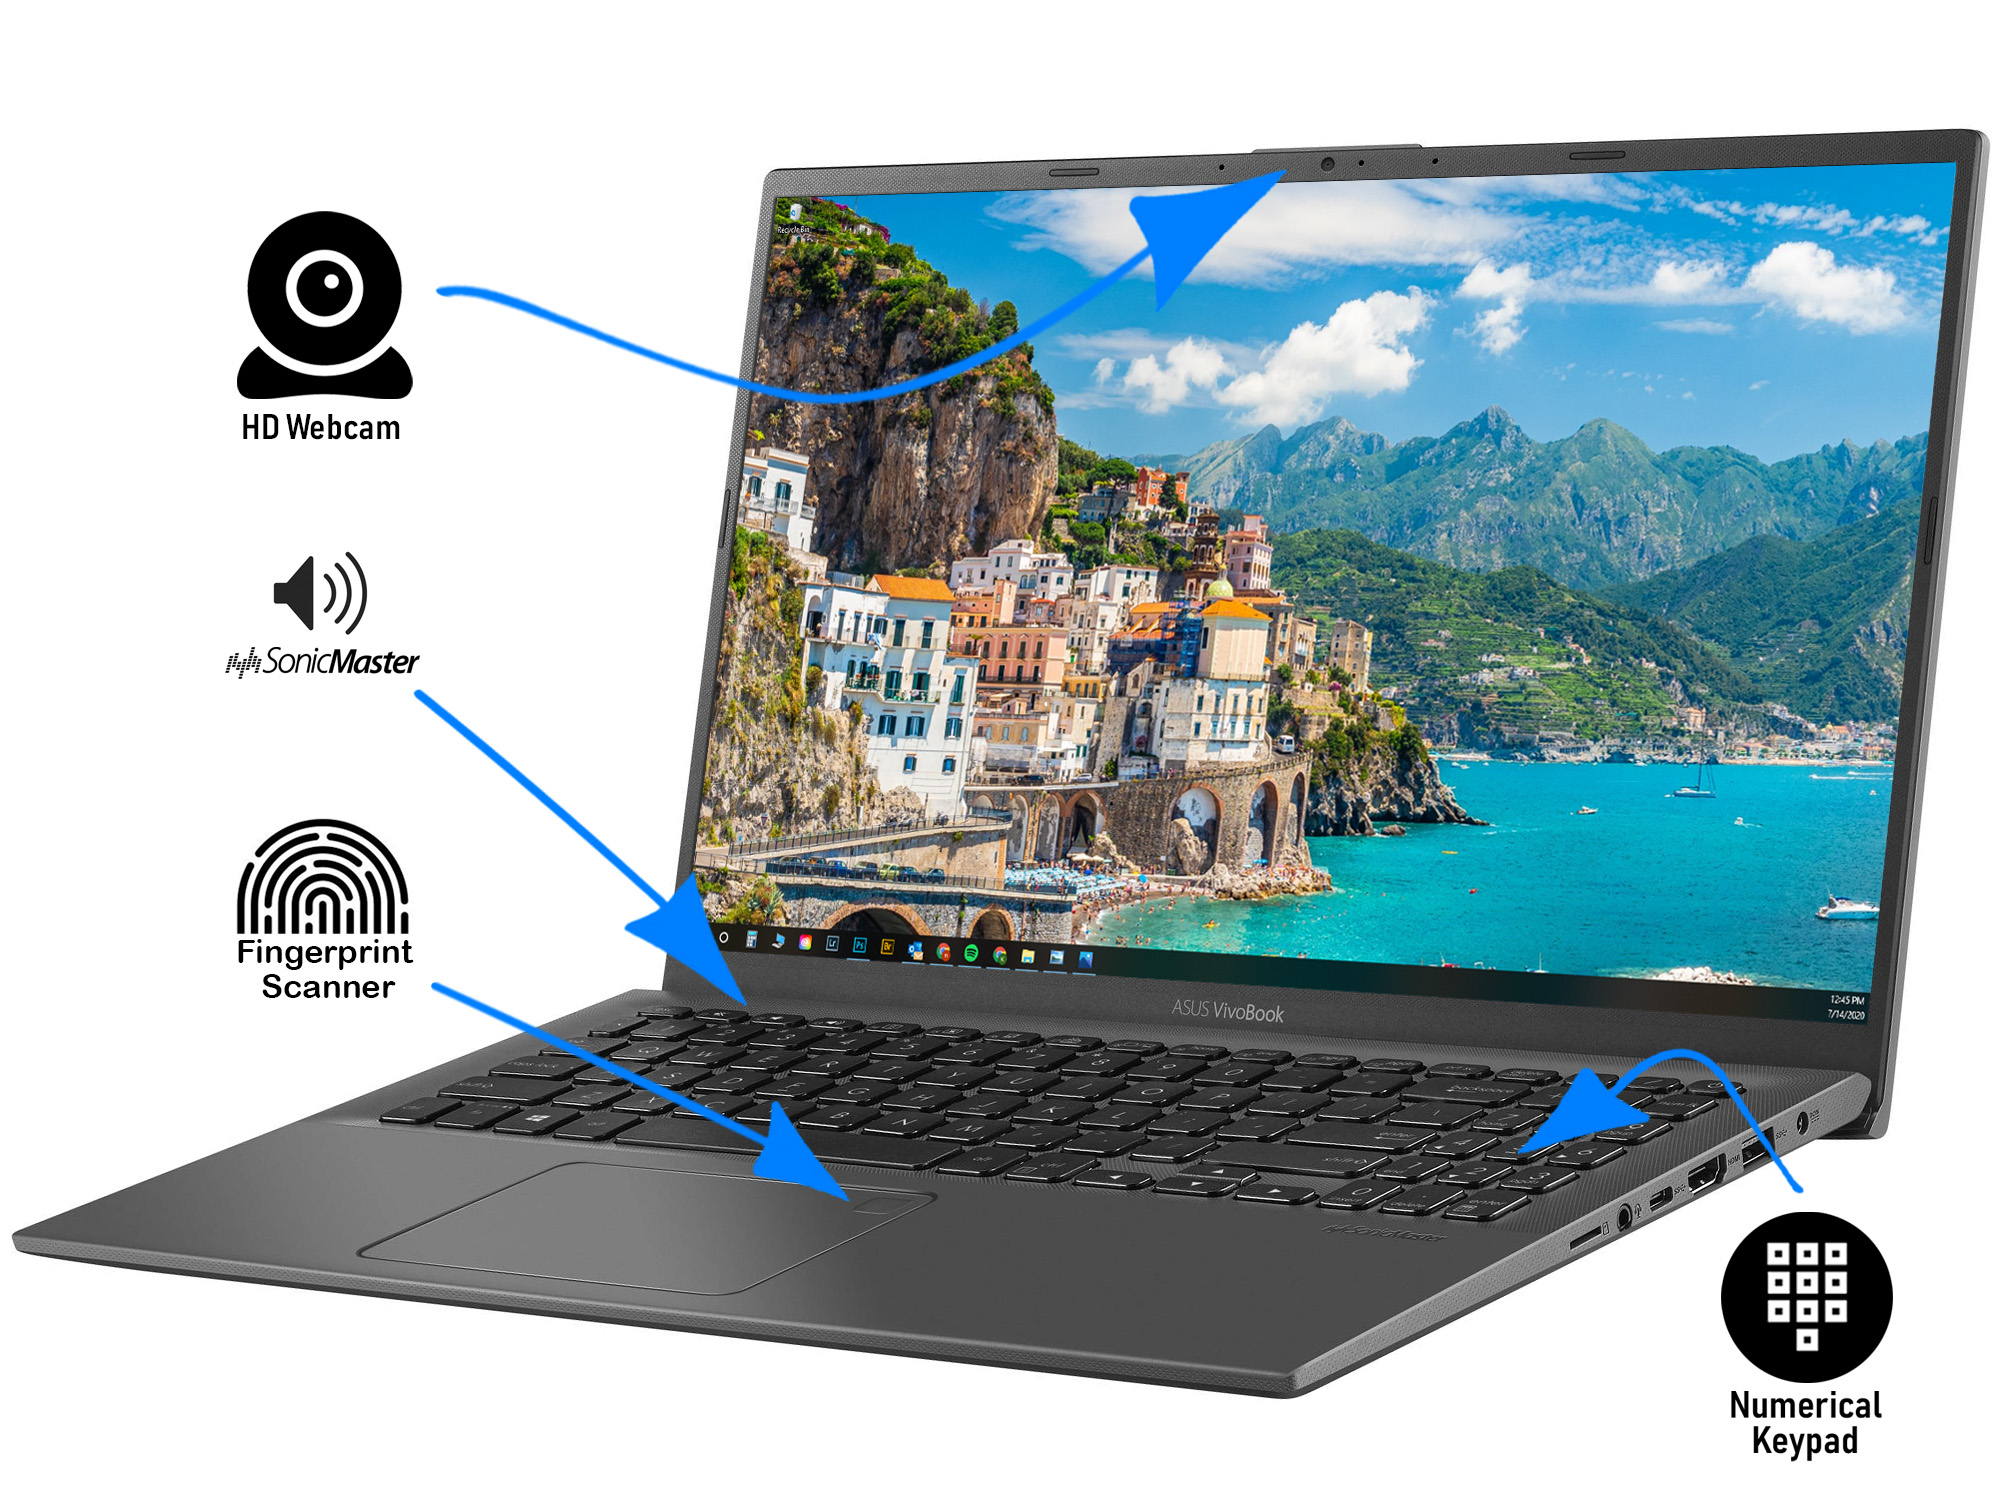 2021 Flagship ASUS VivoBook 15 Thin and Light Laptop I 15.6" FHD Touchscreen Display I 10th Gen Intel Quad-Core i5-1035G1 I 8GB RAM 256GB SSD I Fingerprint Webcam WIFI HDMI Win 10 - image 2 of 6